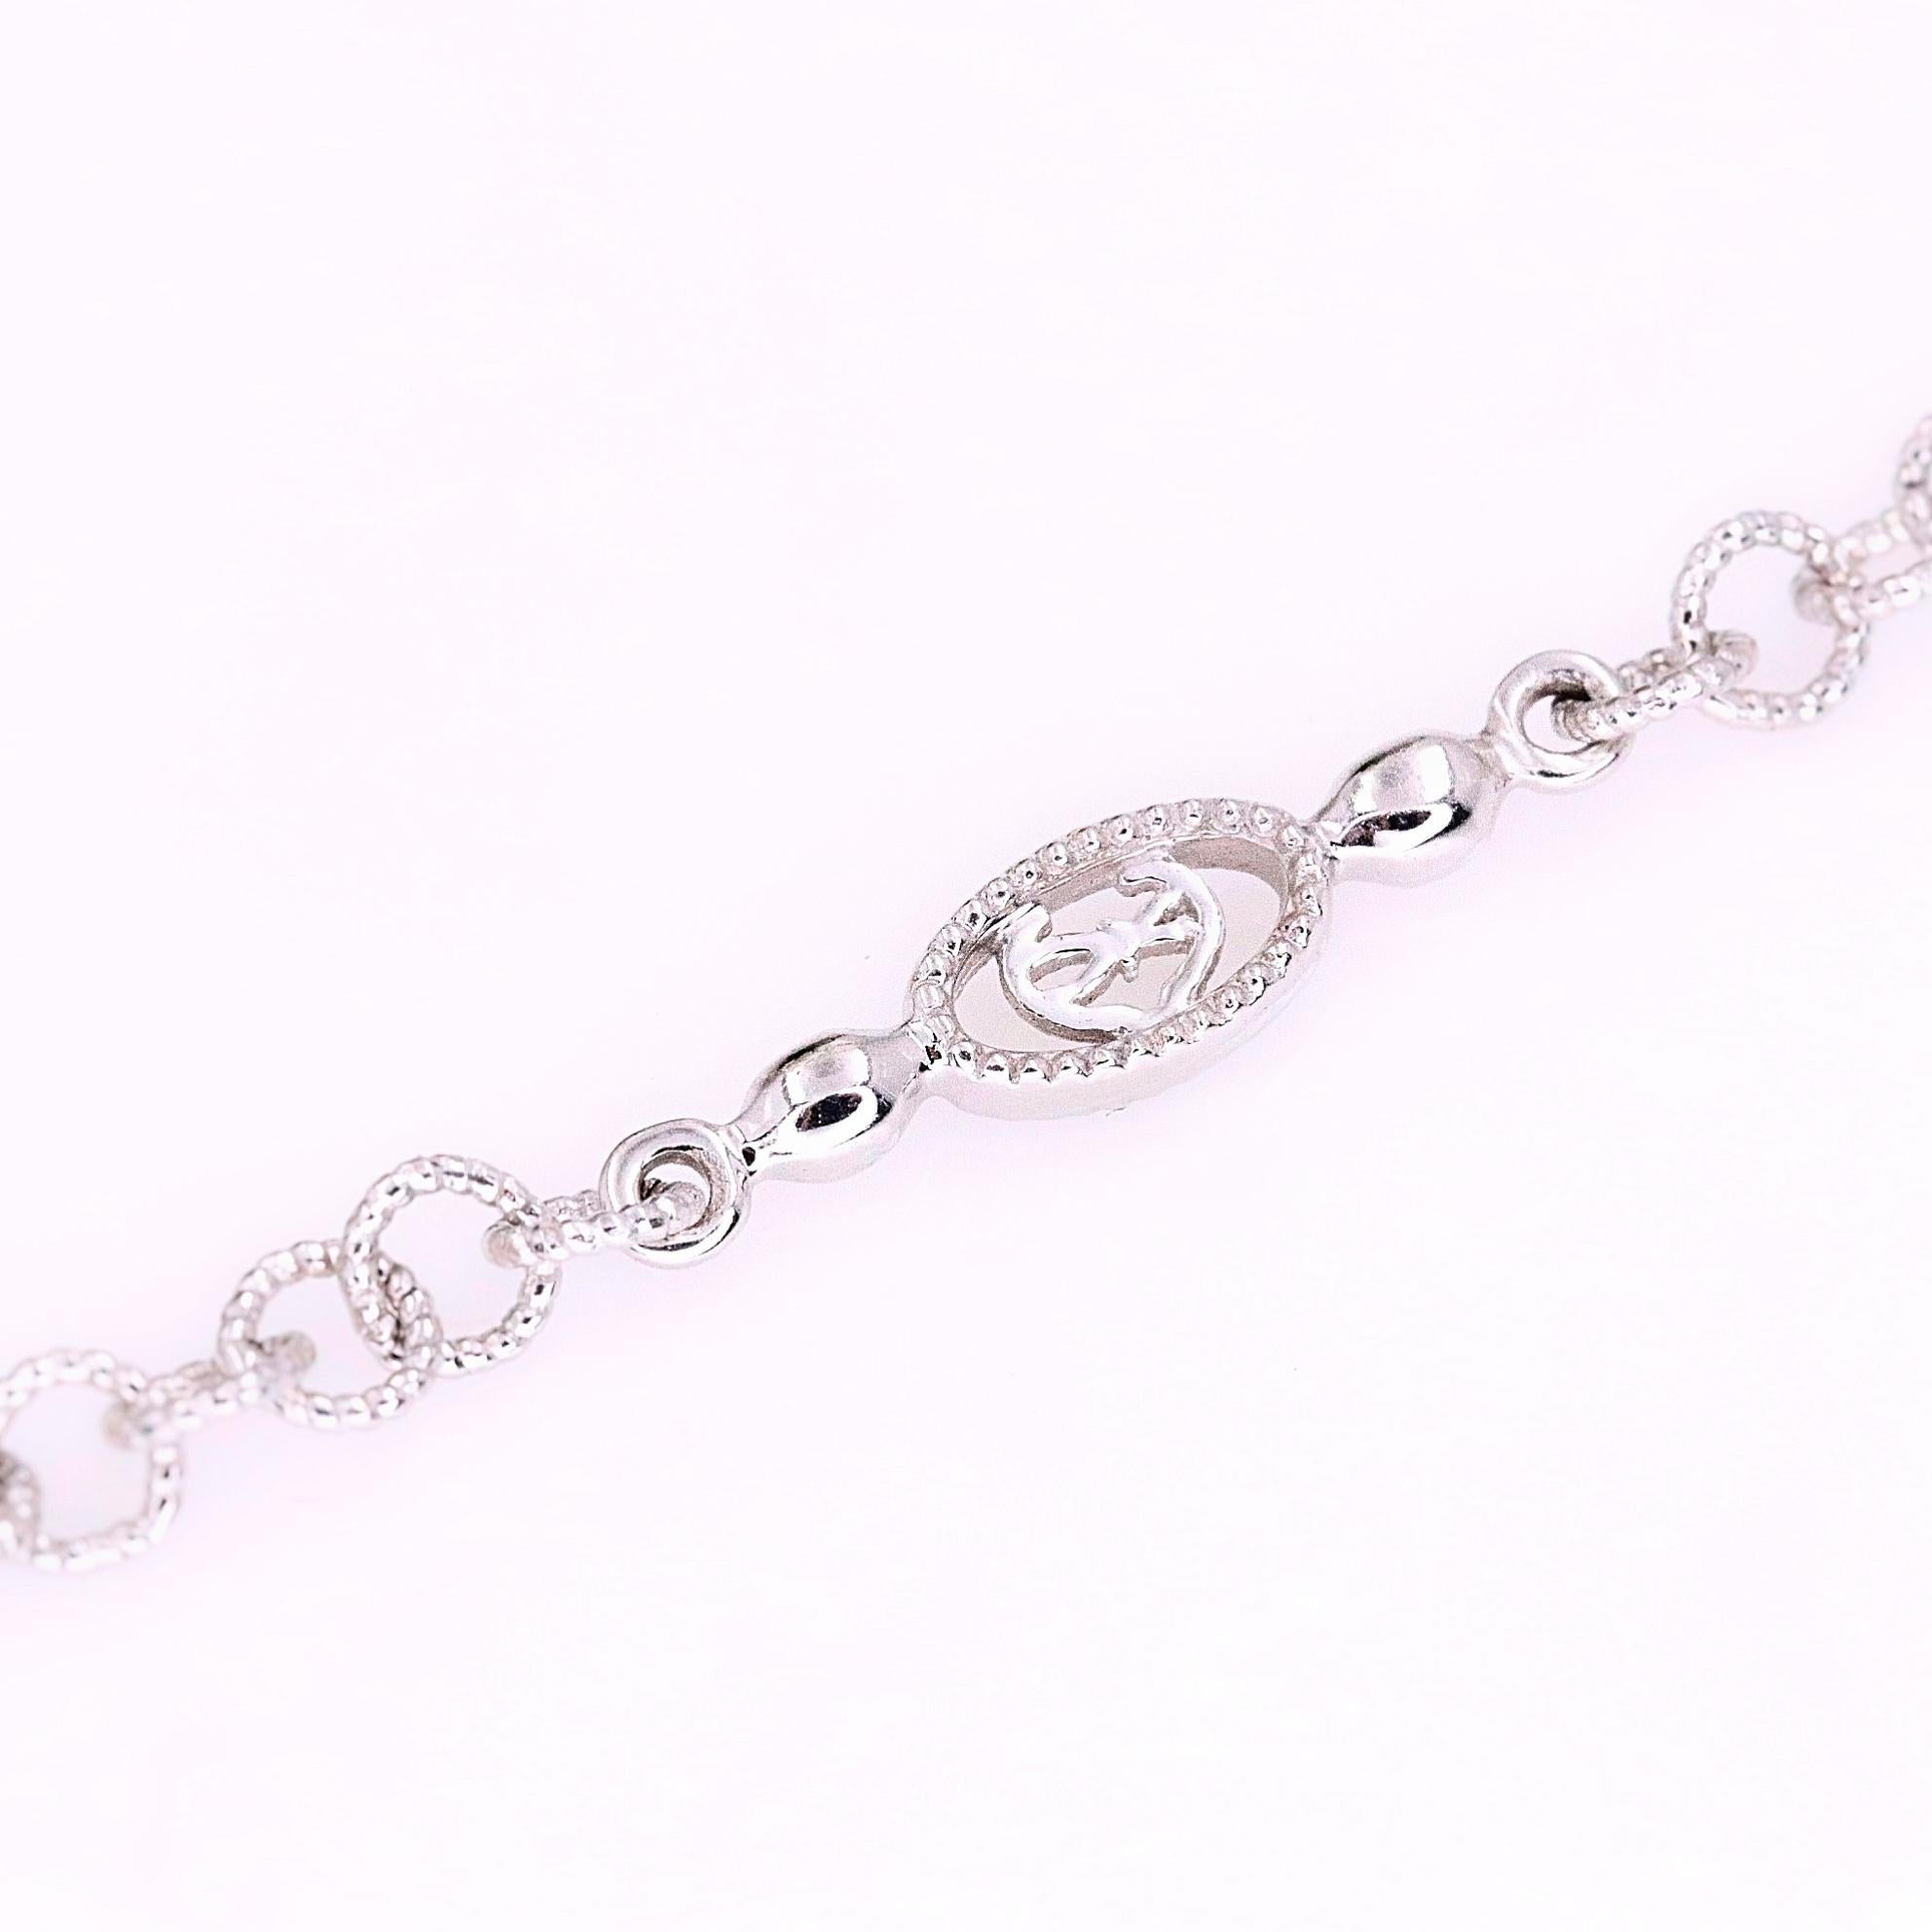 Phillipe Charriol Marquise Diamond Pendant Necklace in 18 Karat Gold 0.65 Carat For Sale 4